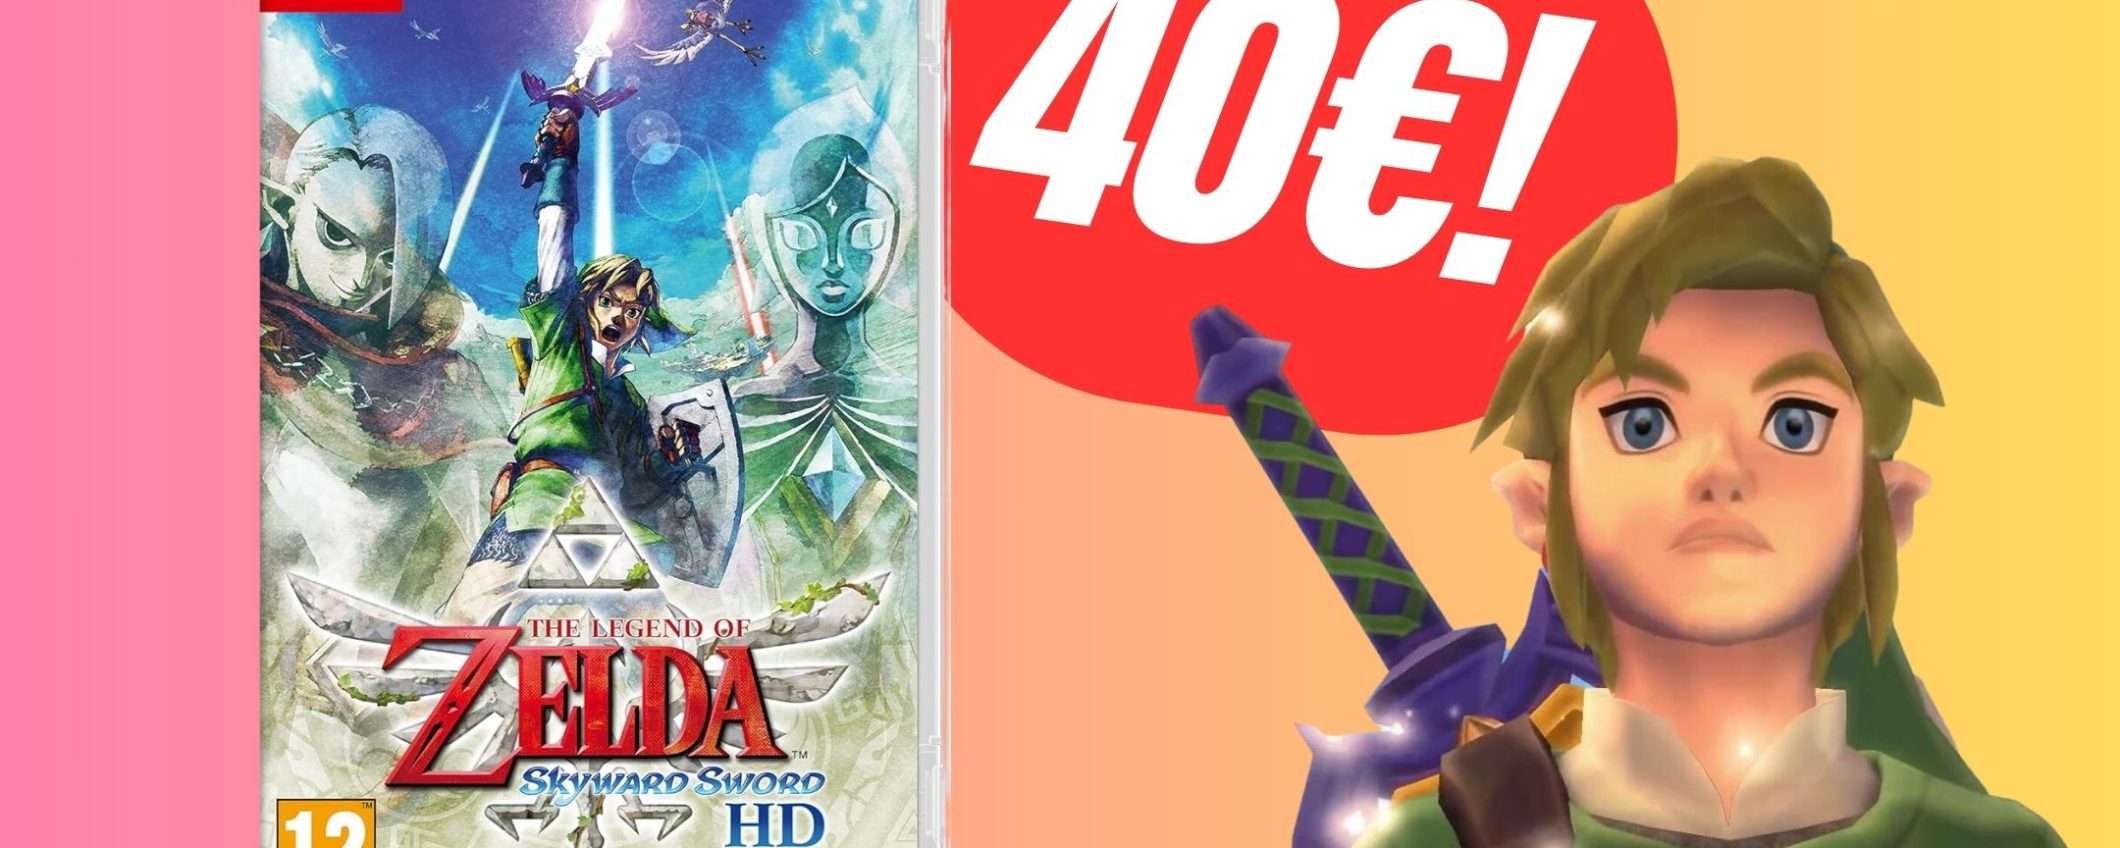 The Legend Of Zelda: Skyward Sword HD è in SCONTO su Amazon!